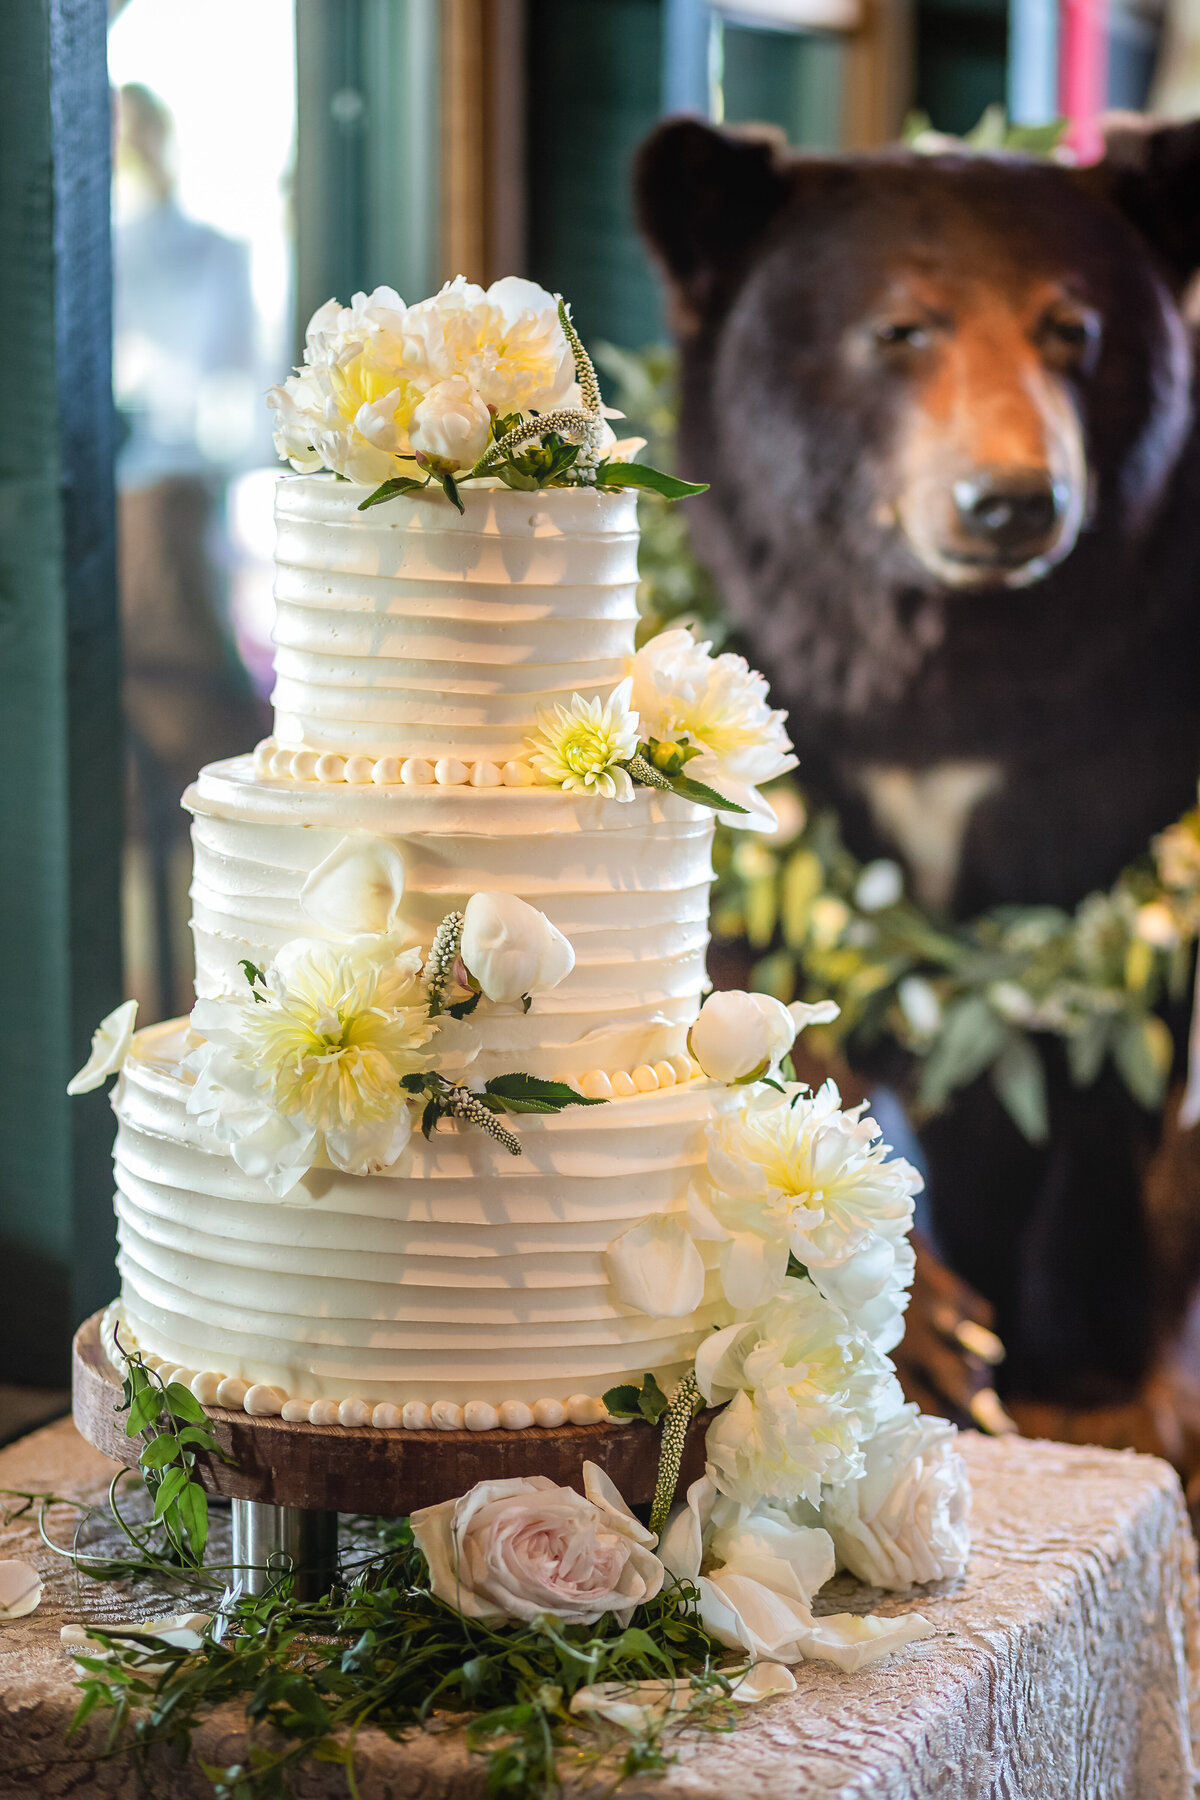 Wedding Cake created by the Broadmoor